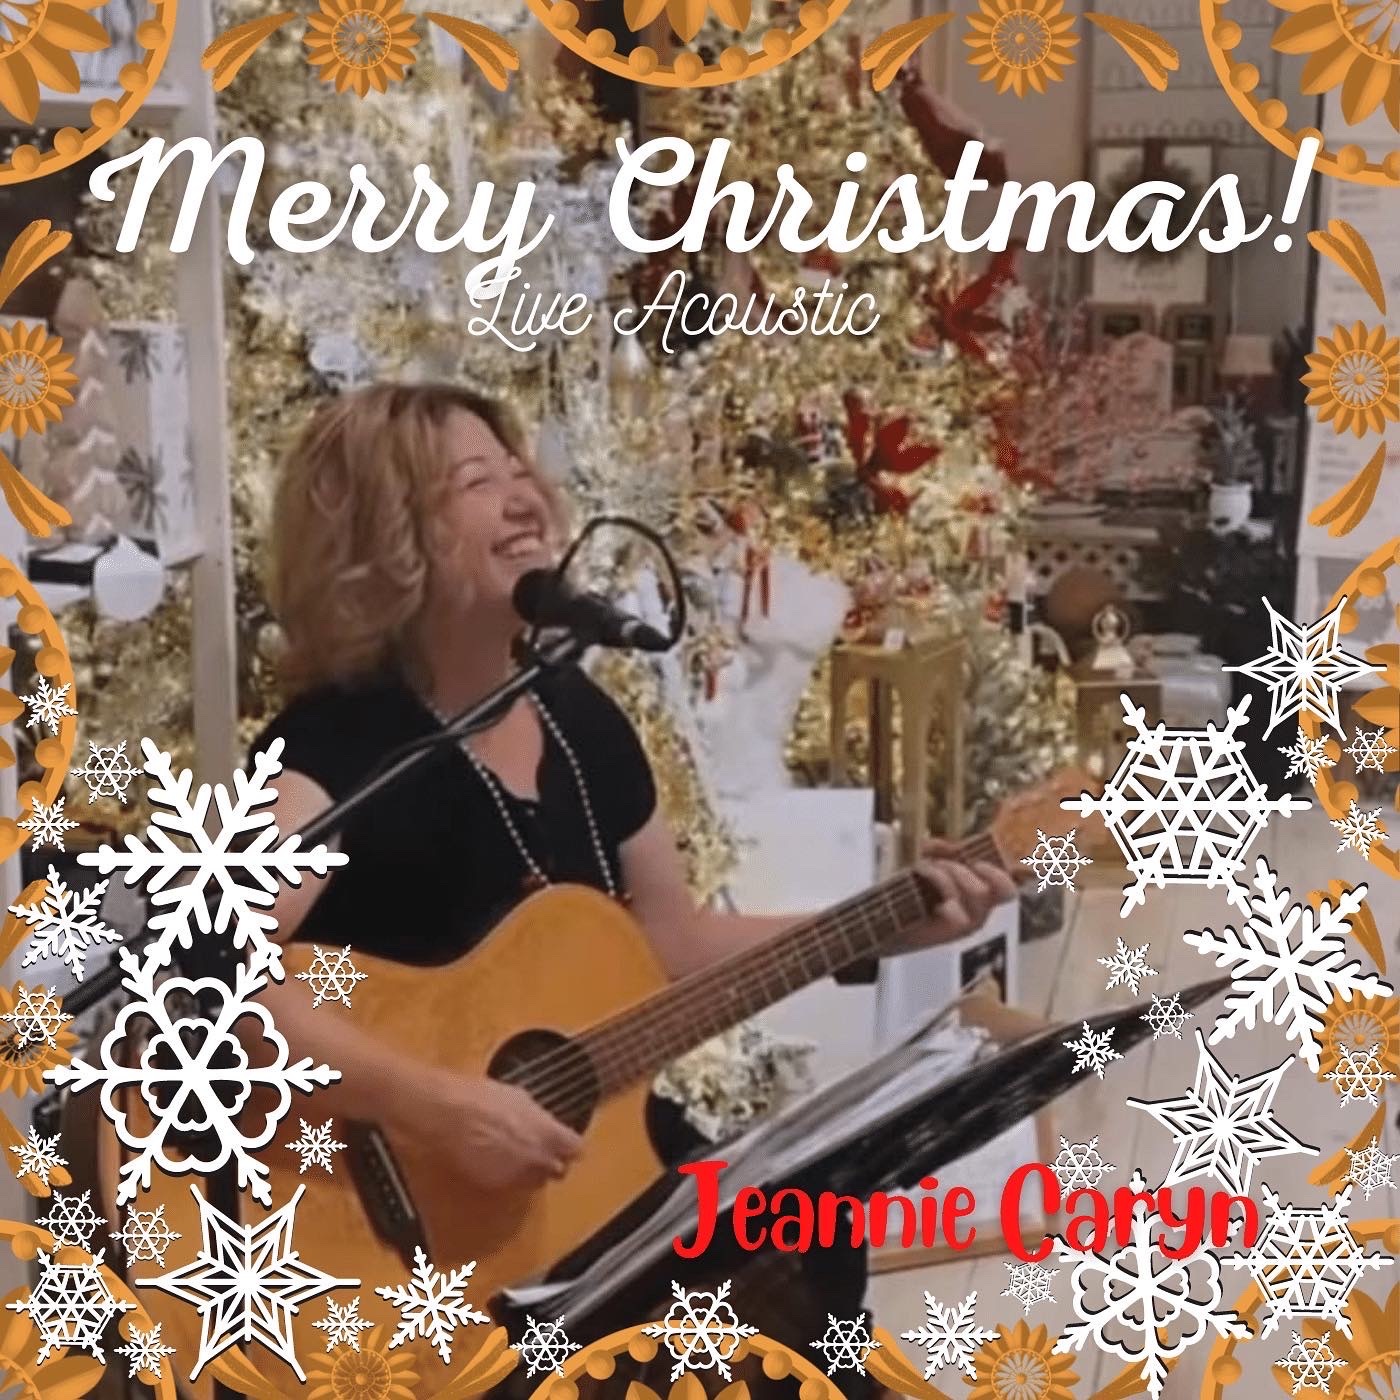 Jeannie_Caryn_Merry_Christmas_Album_Cover_221...